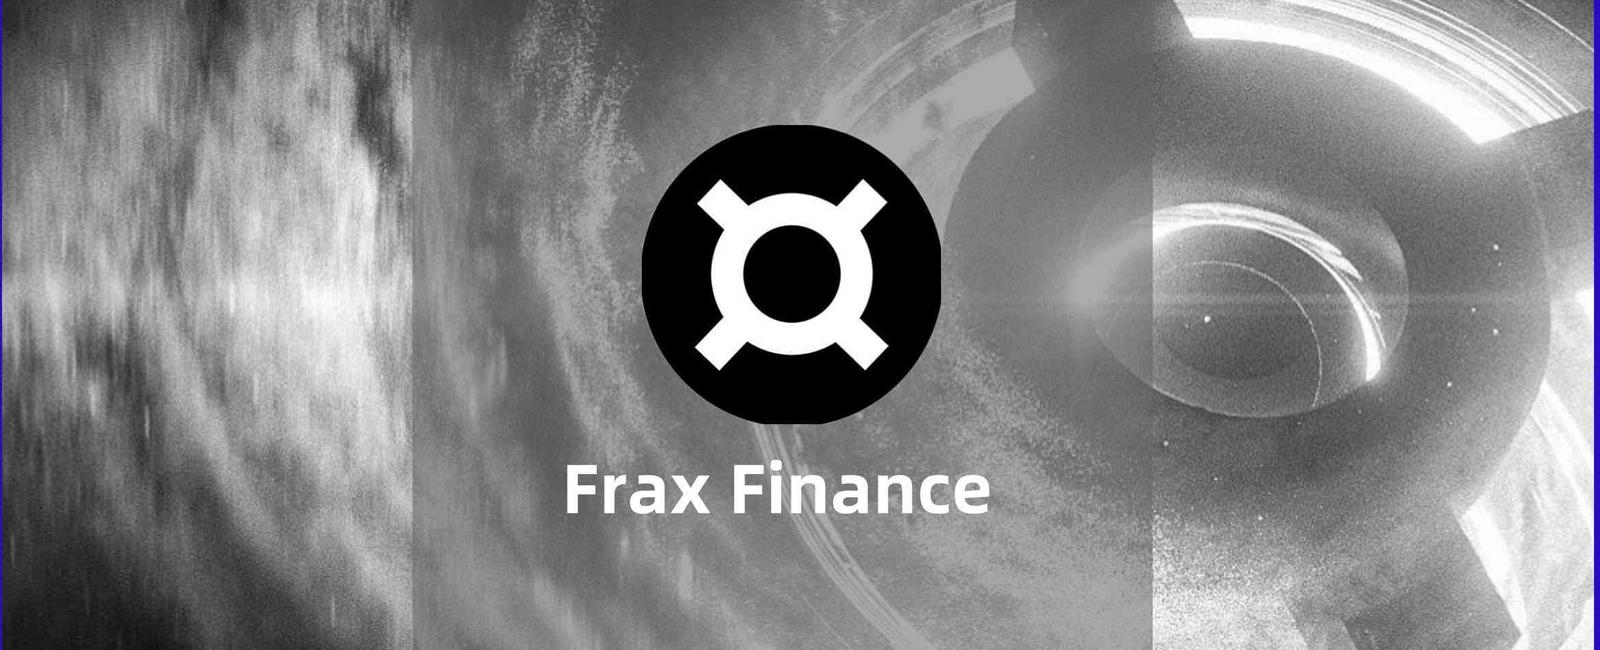 Frax finance-帝国的新篇章